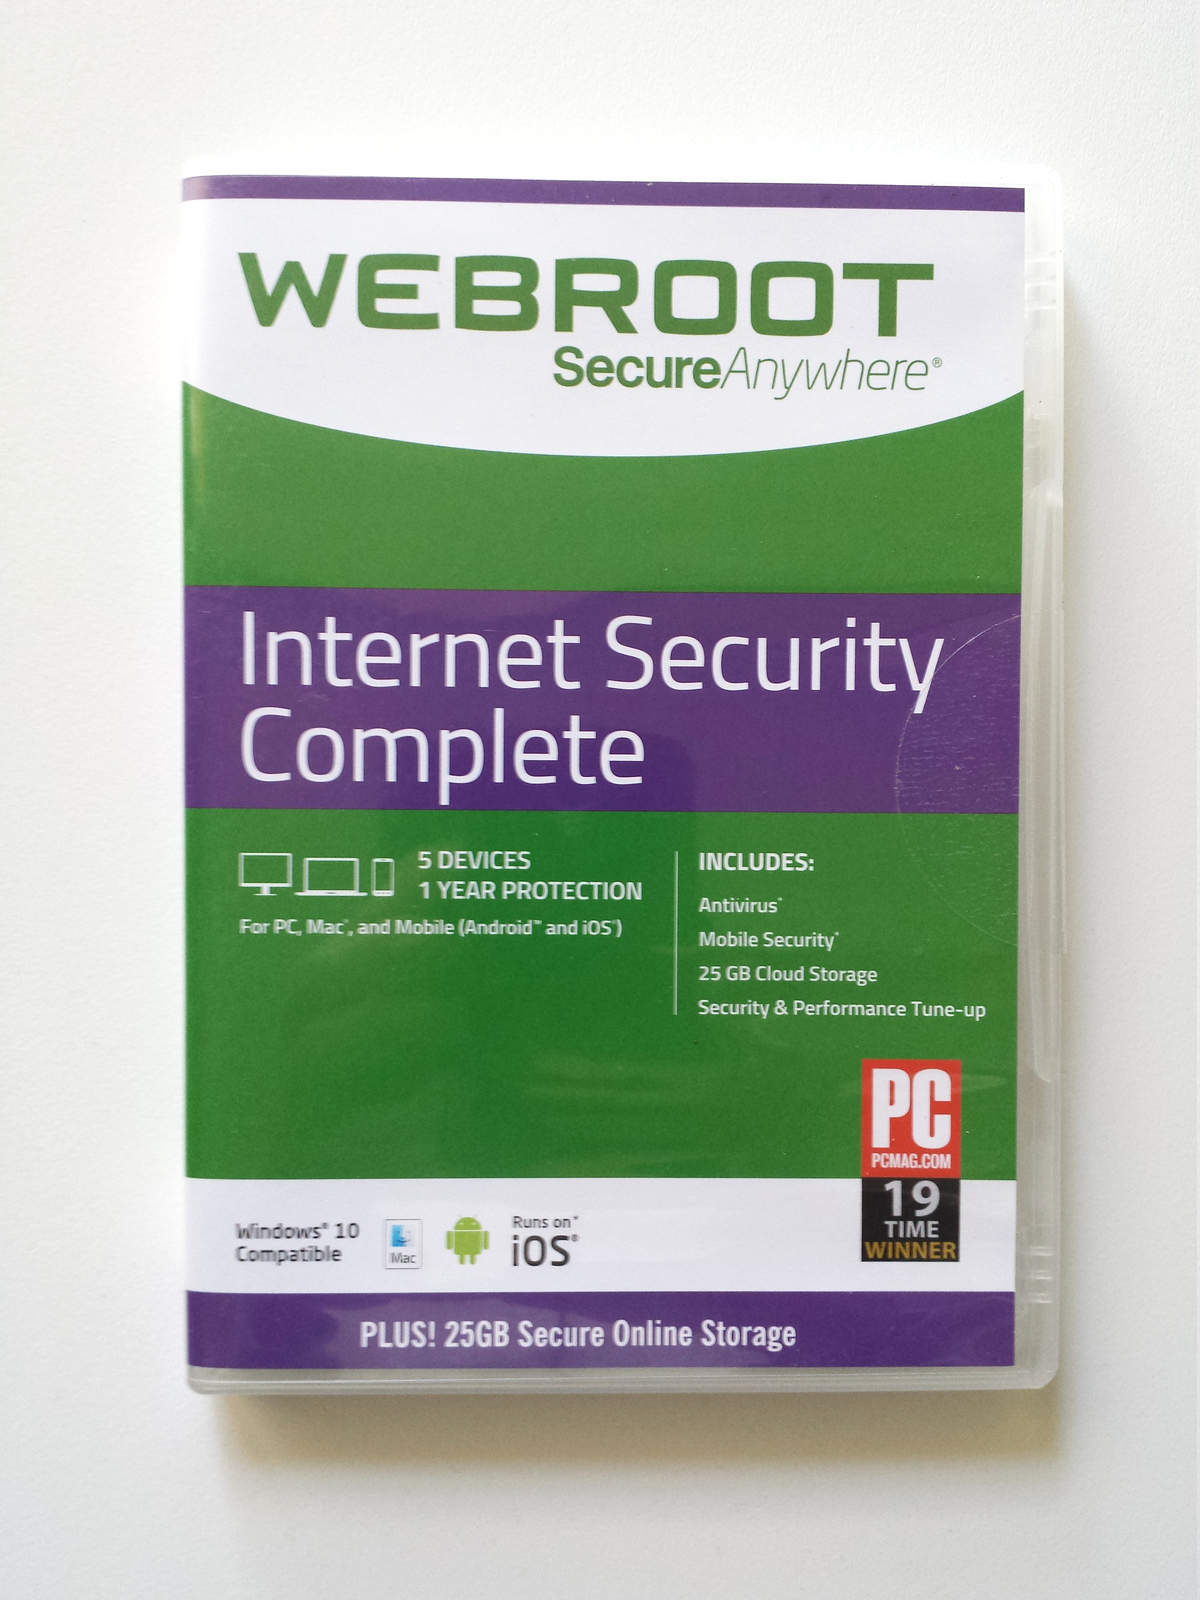 is webroot internet security complete safe